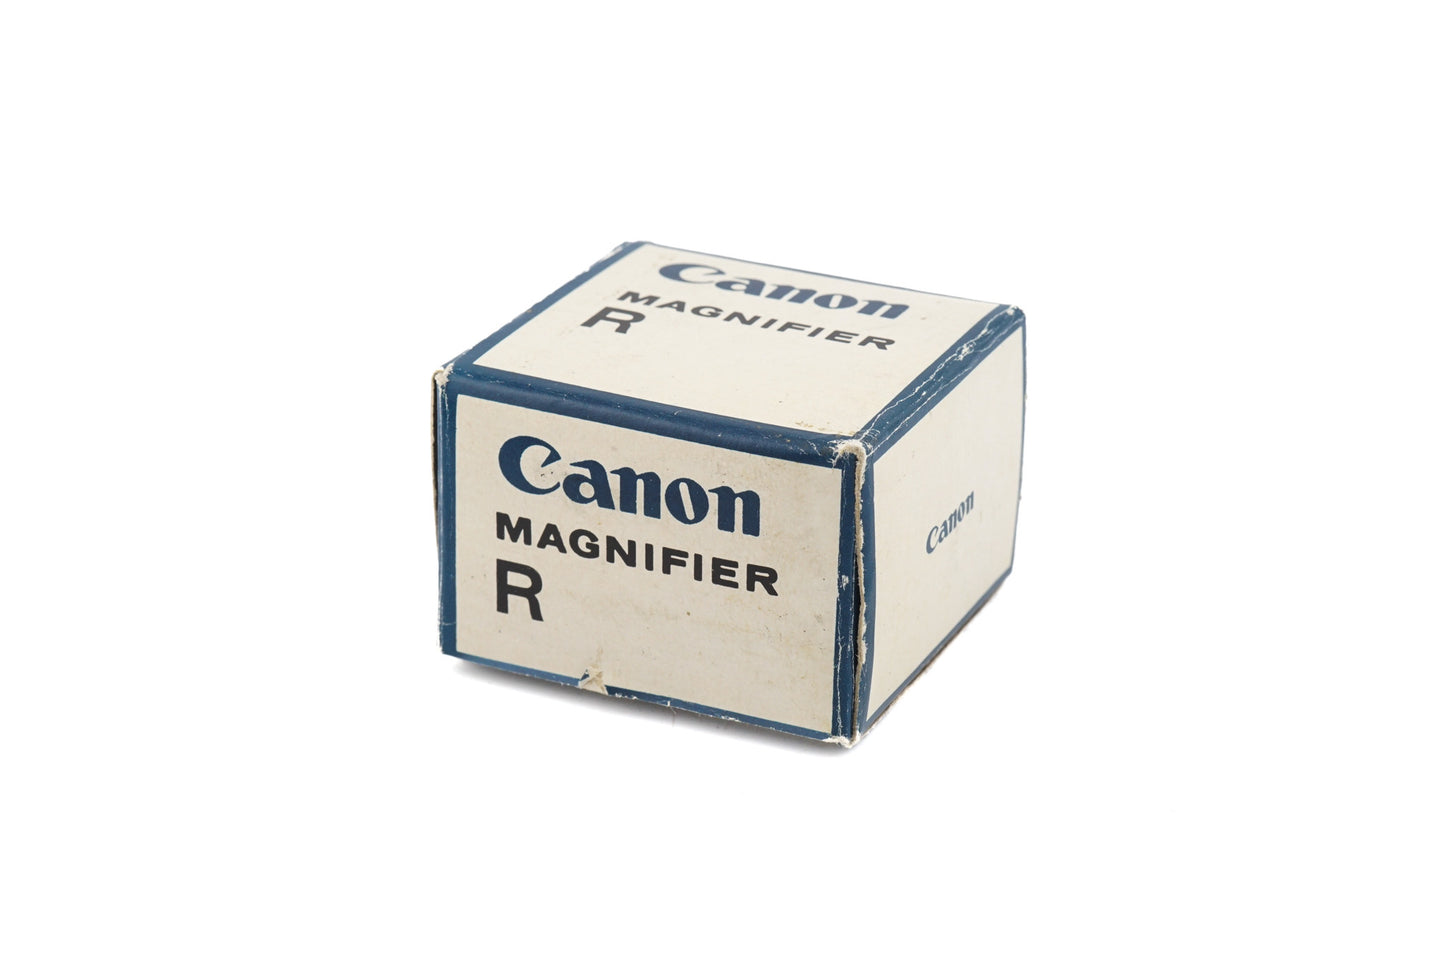 Canon Magnifier R